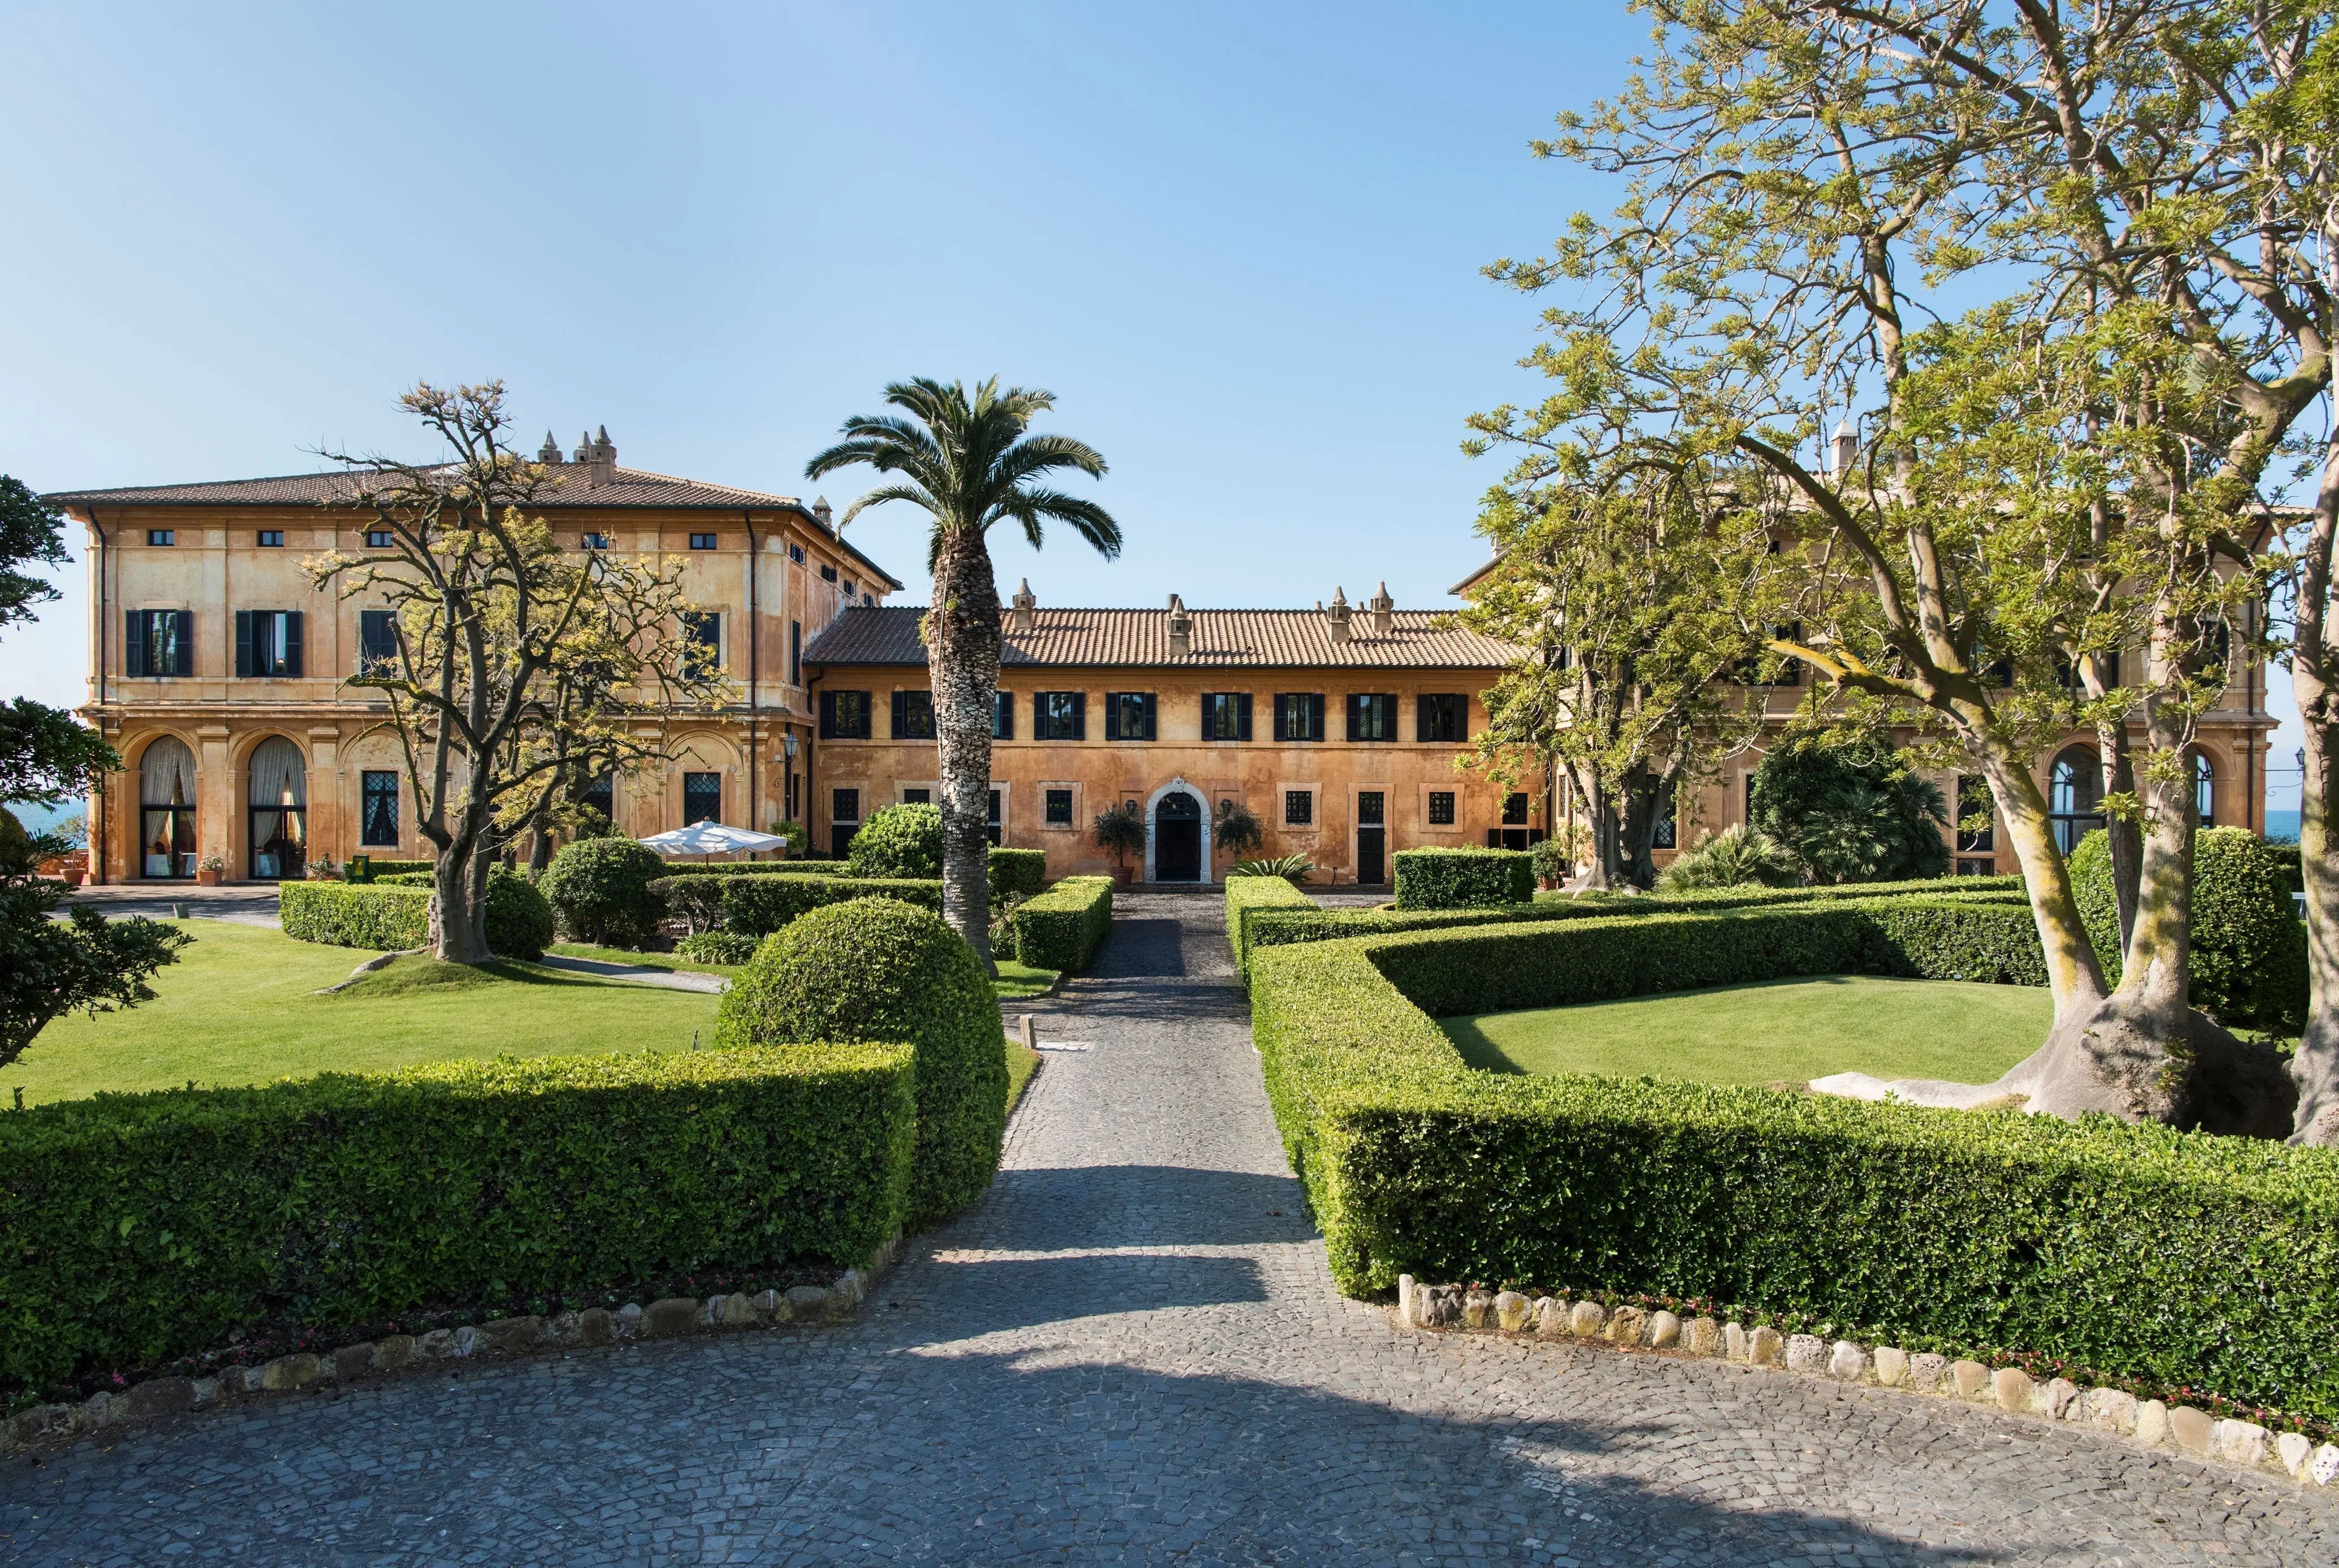 Nest Italy - Luxury Hotel near Rome